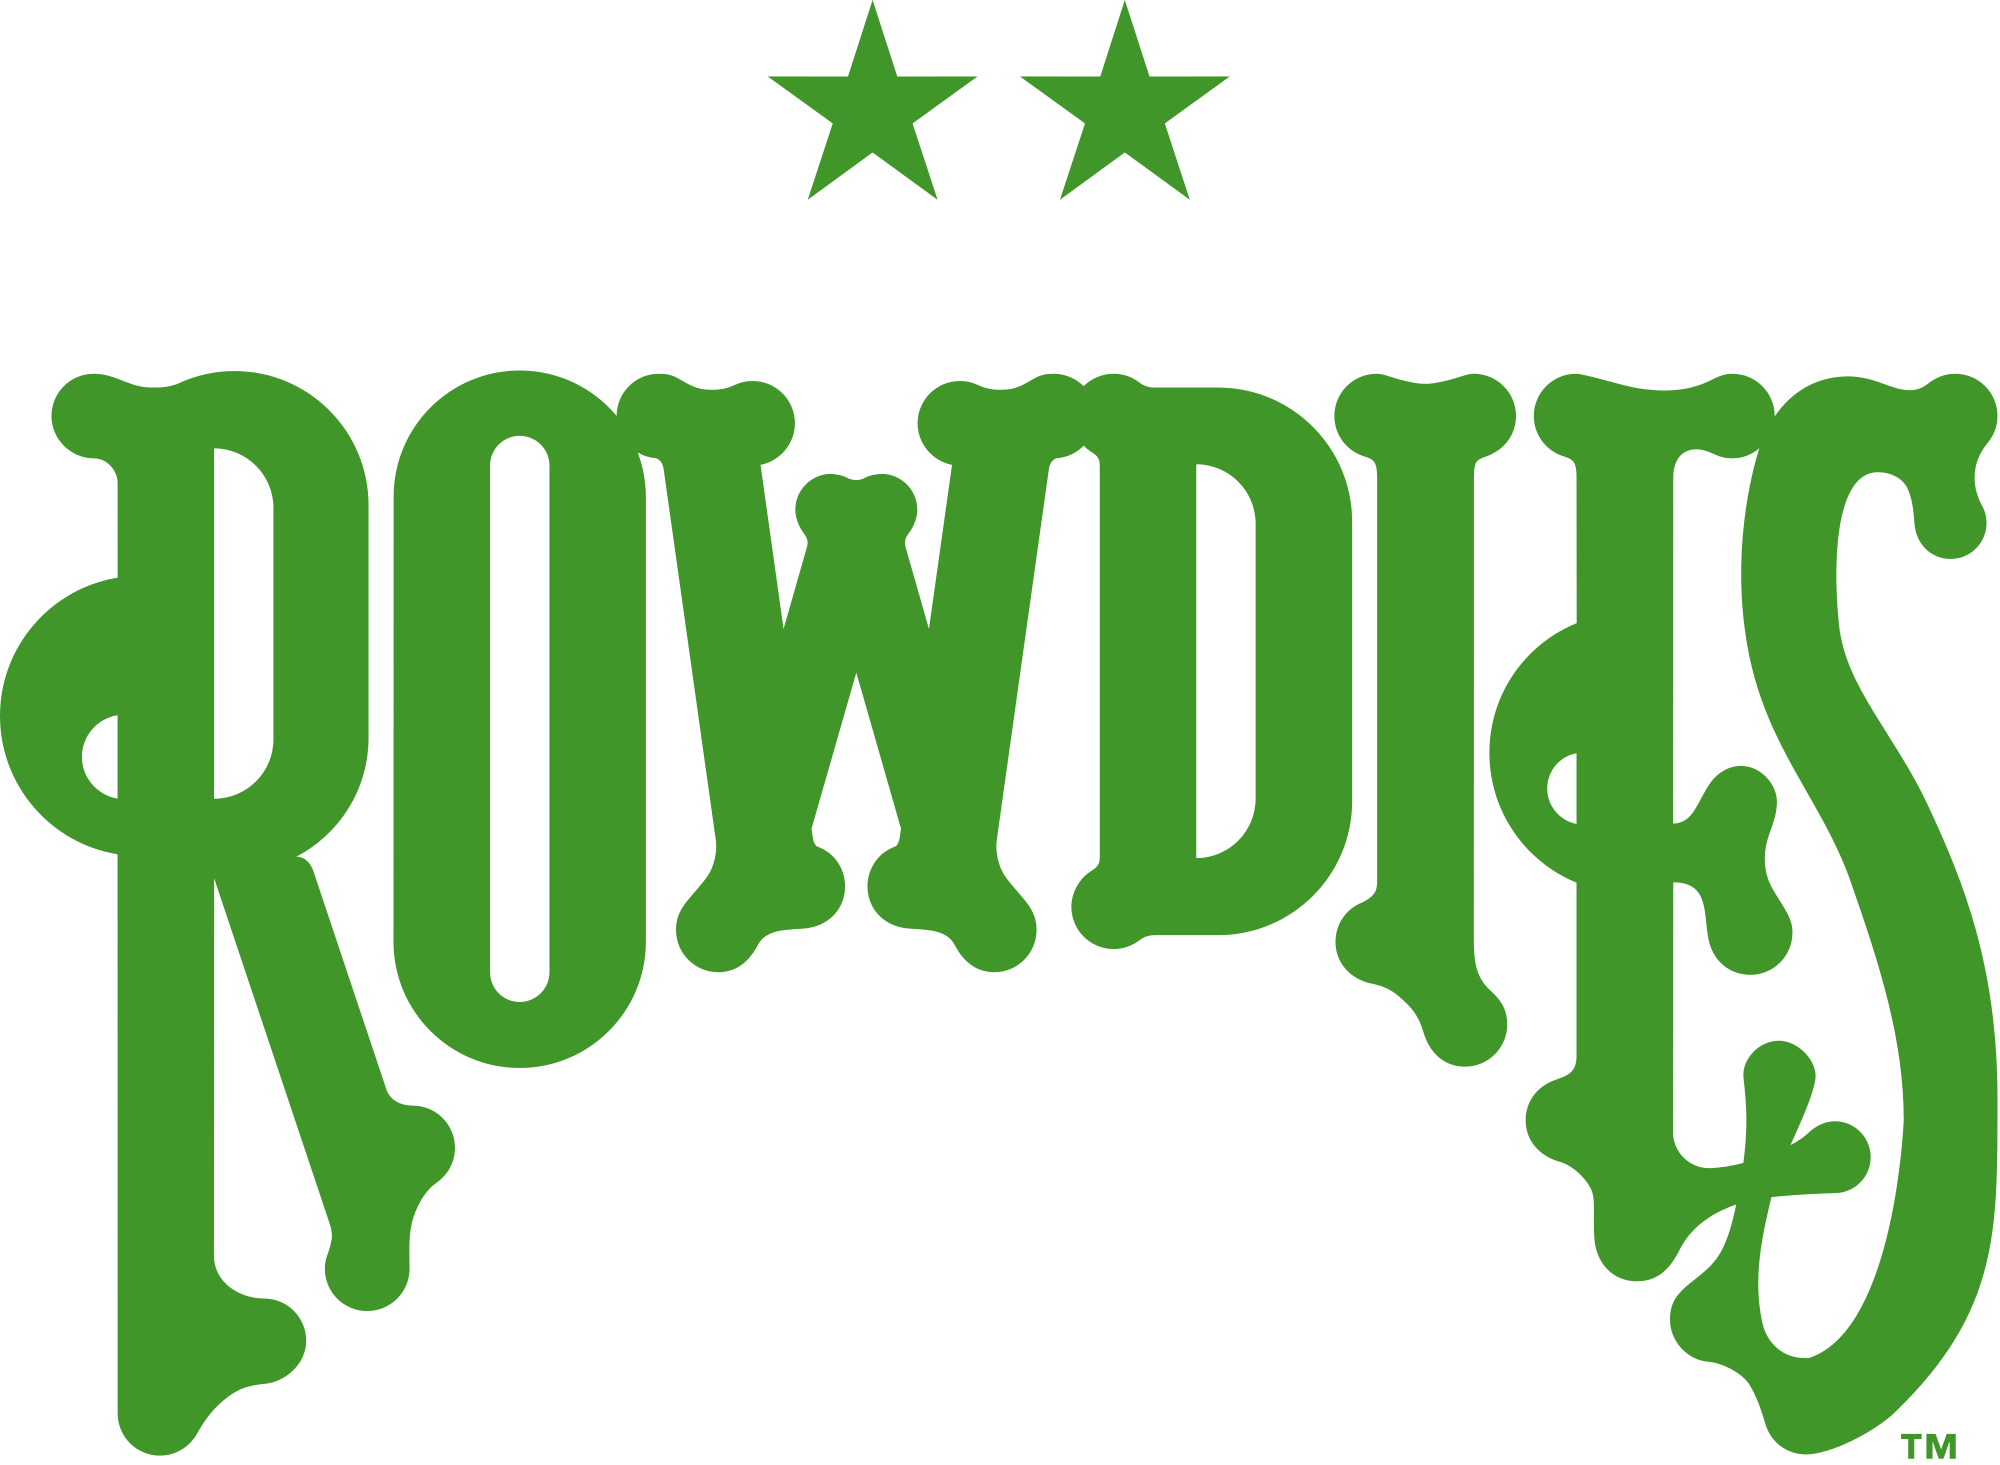 Tampa_Bay_Rowdies_logo_(two_green_stars).svg.png